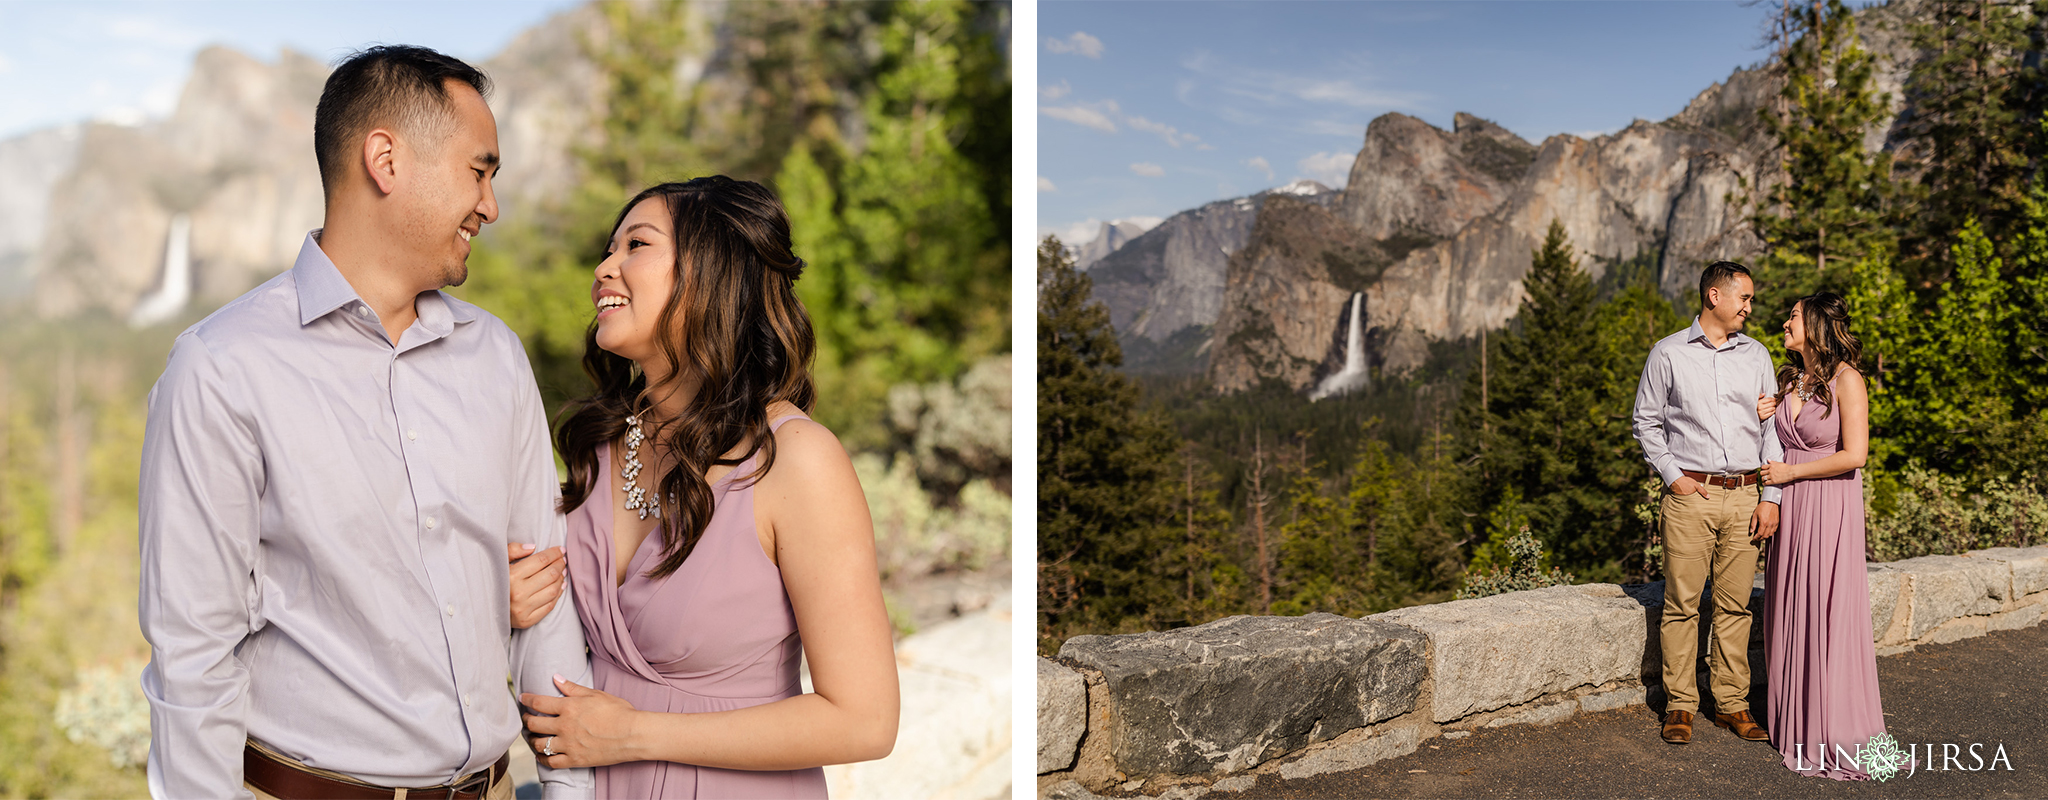 02 Yosemite National Park Travel Destination Engagement Photography